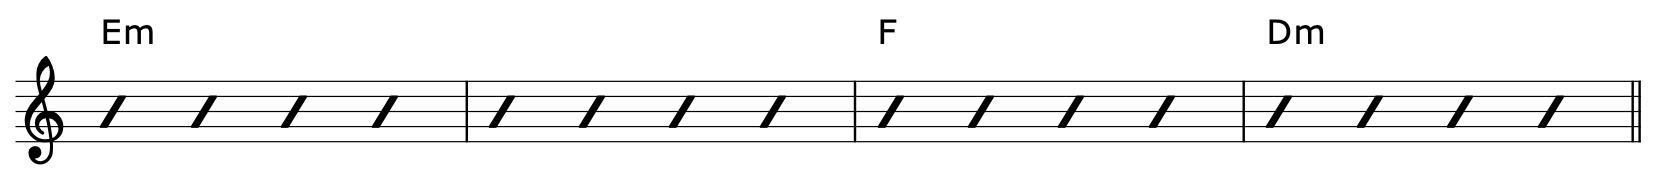 Modal Chord Progression E Phrygian